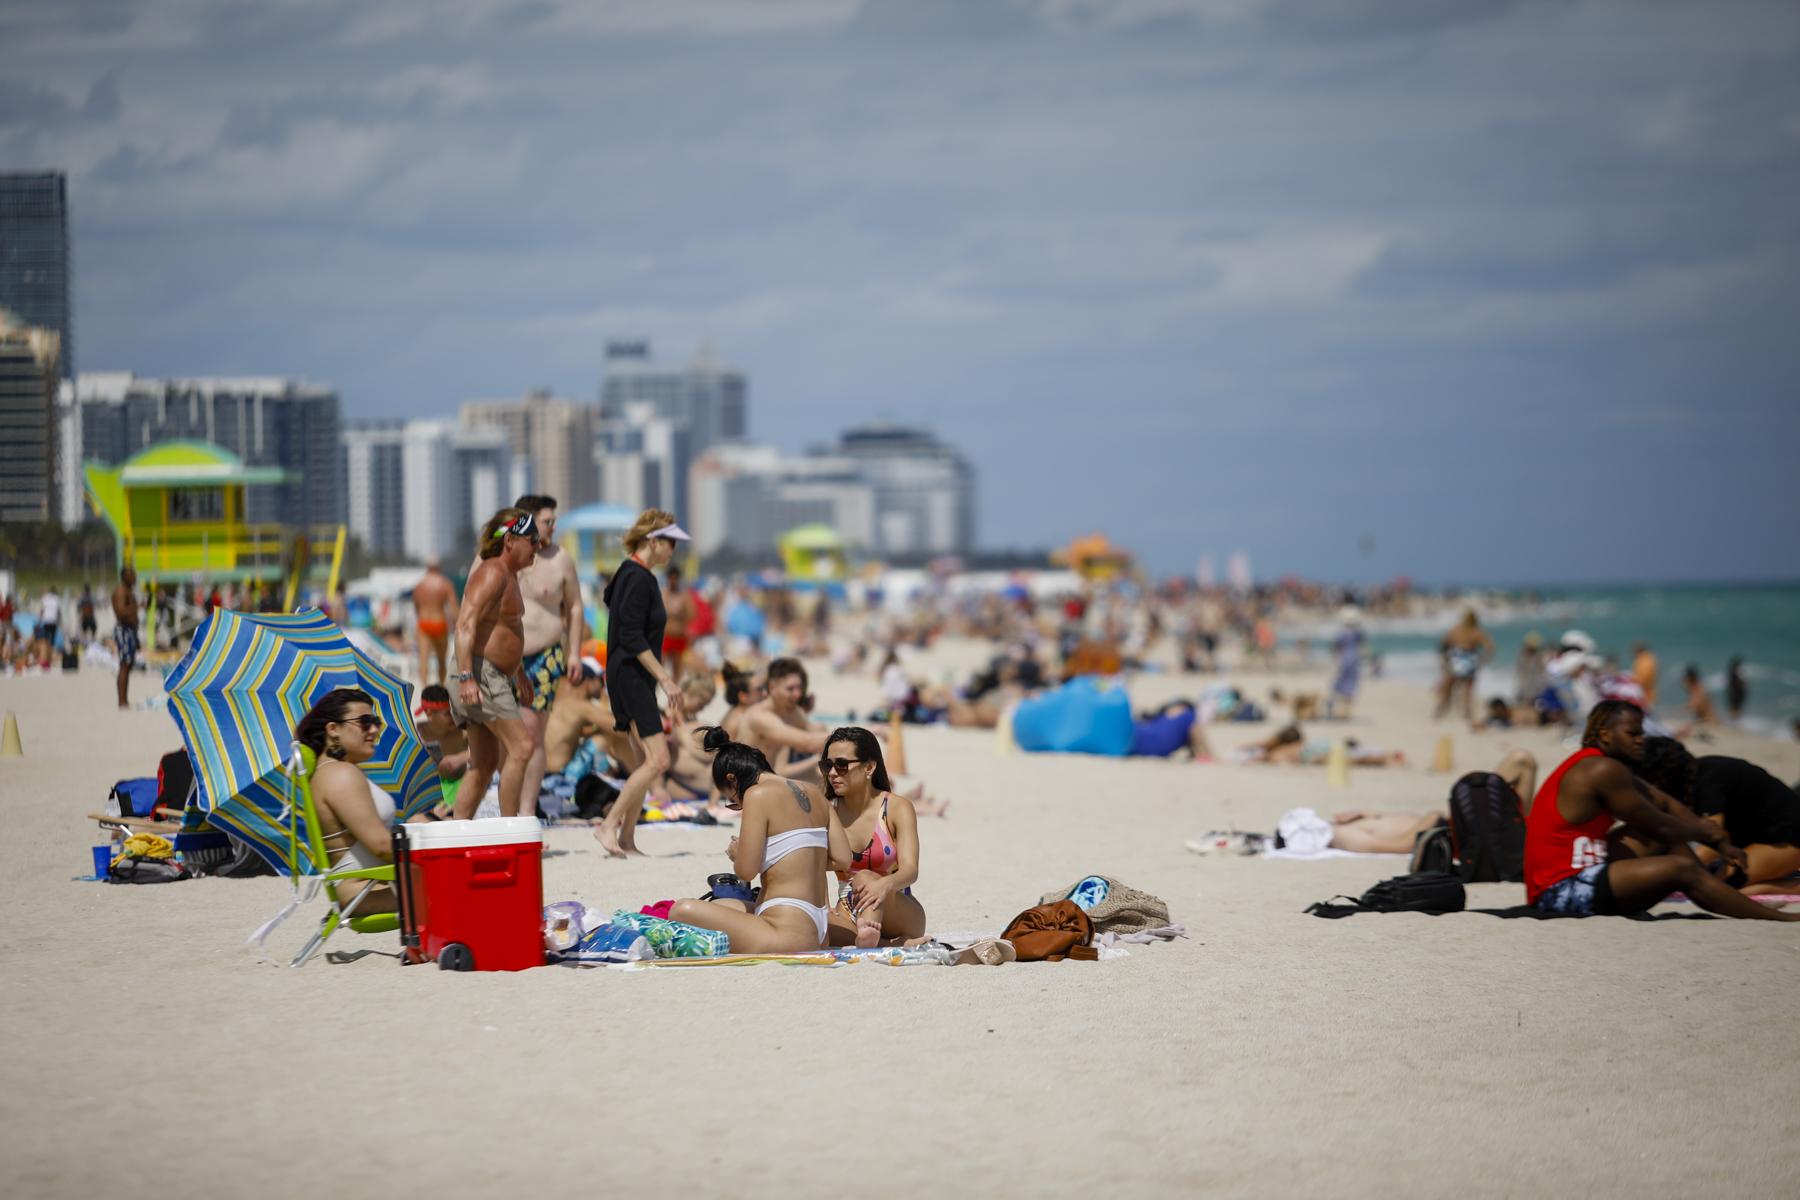 2021 Spring Break @ Miami Beach - People sit on the beach during Spring Break in Miami...